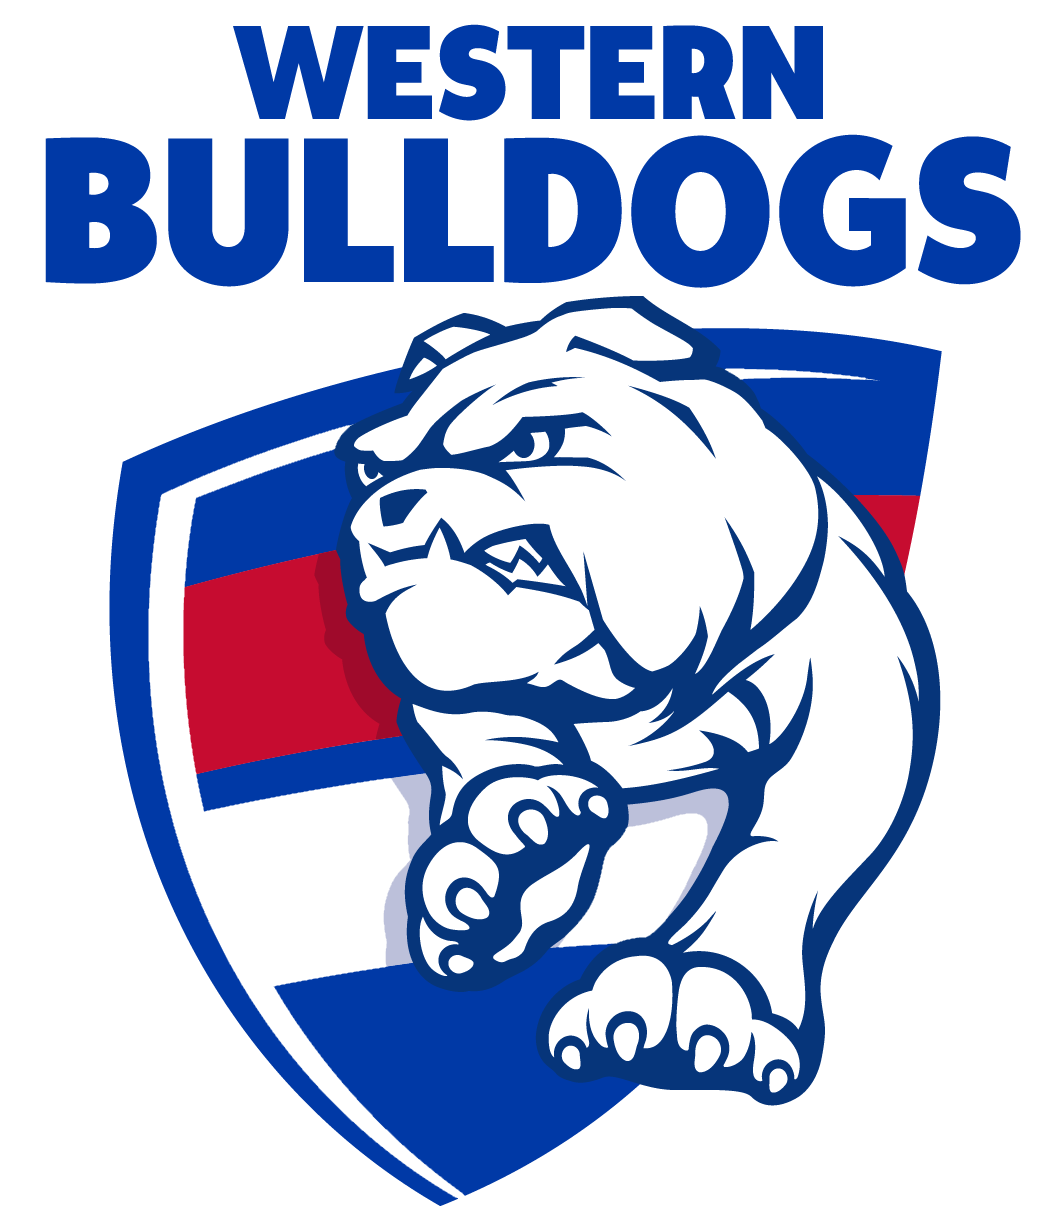 173-1736786_western-bulldogs-logo